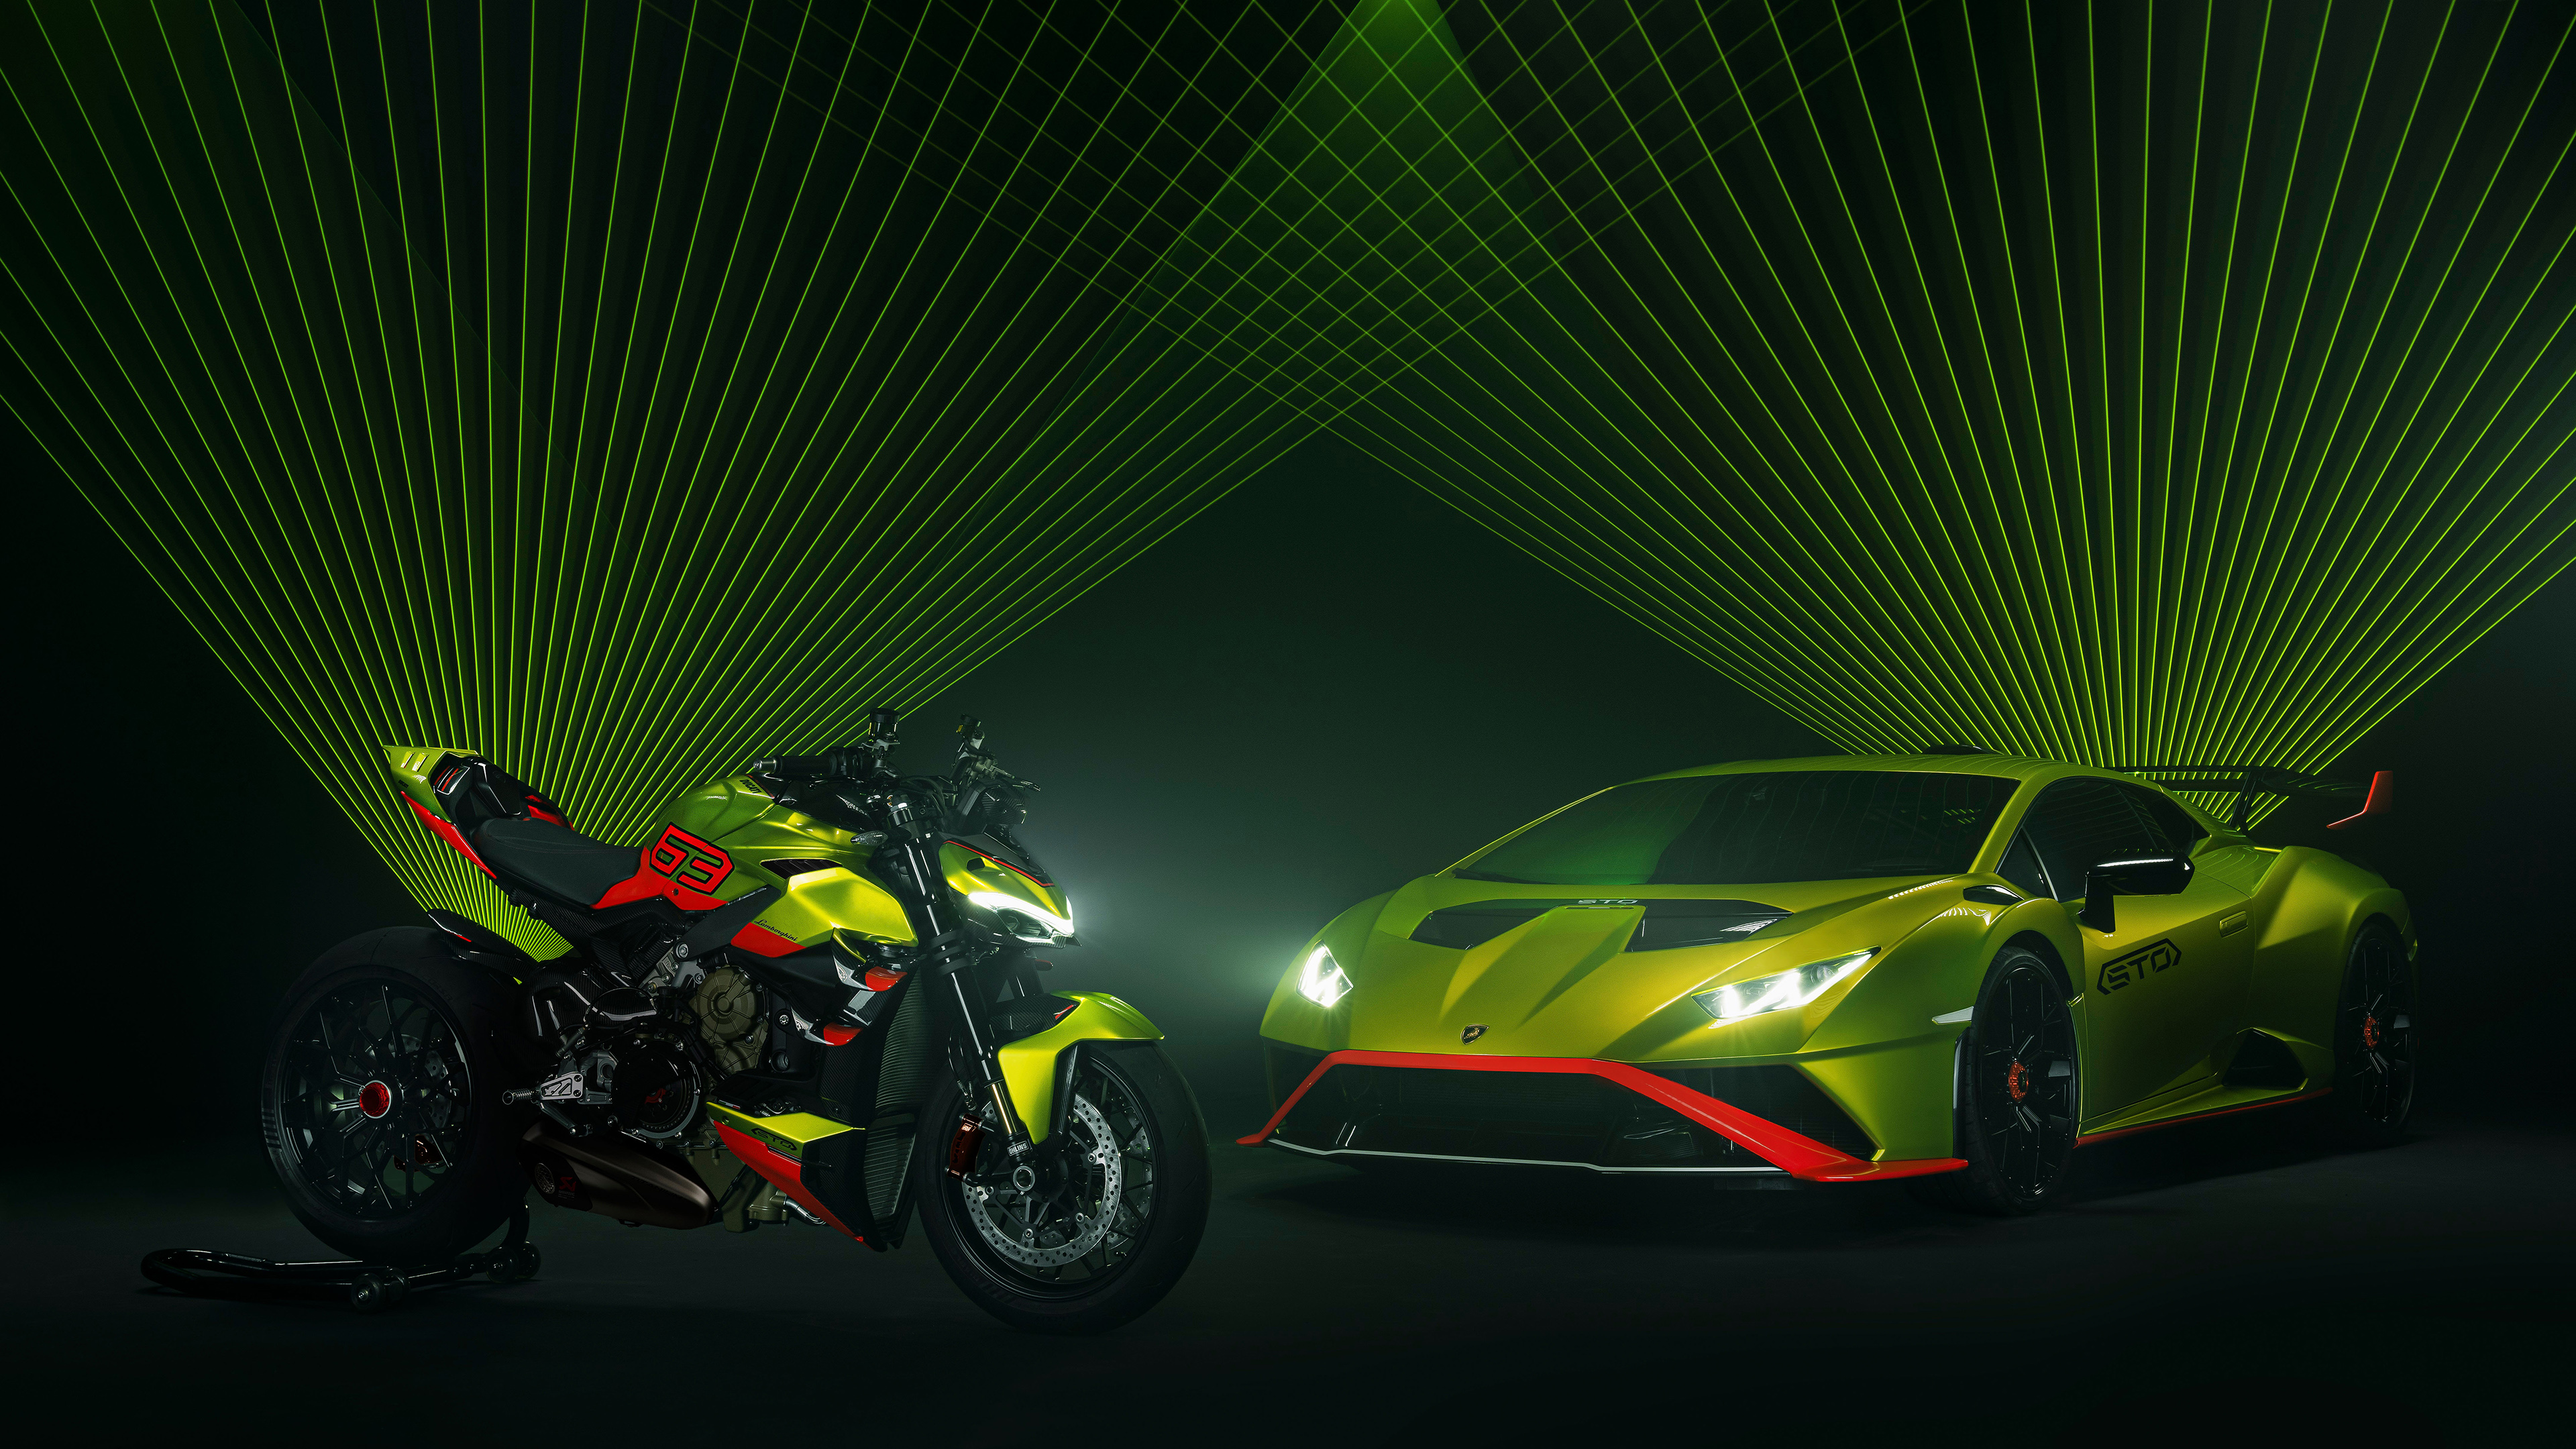 Ducati Streetfighter 848 Lamborghini Huracan STO Car Vehicle Motorcycle Low Light Headlight Beams Gr 3840x2160